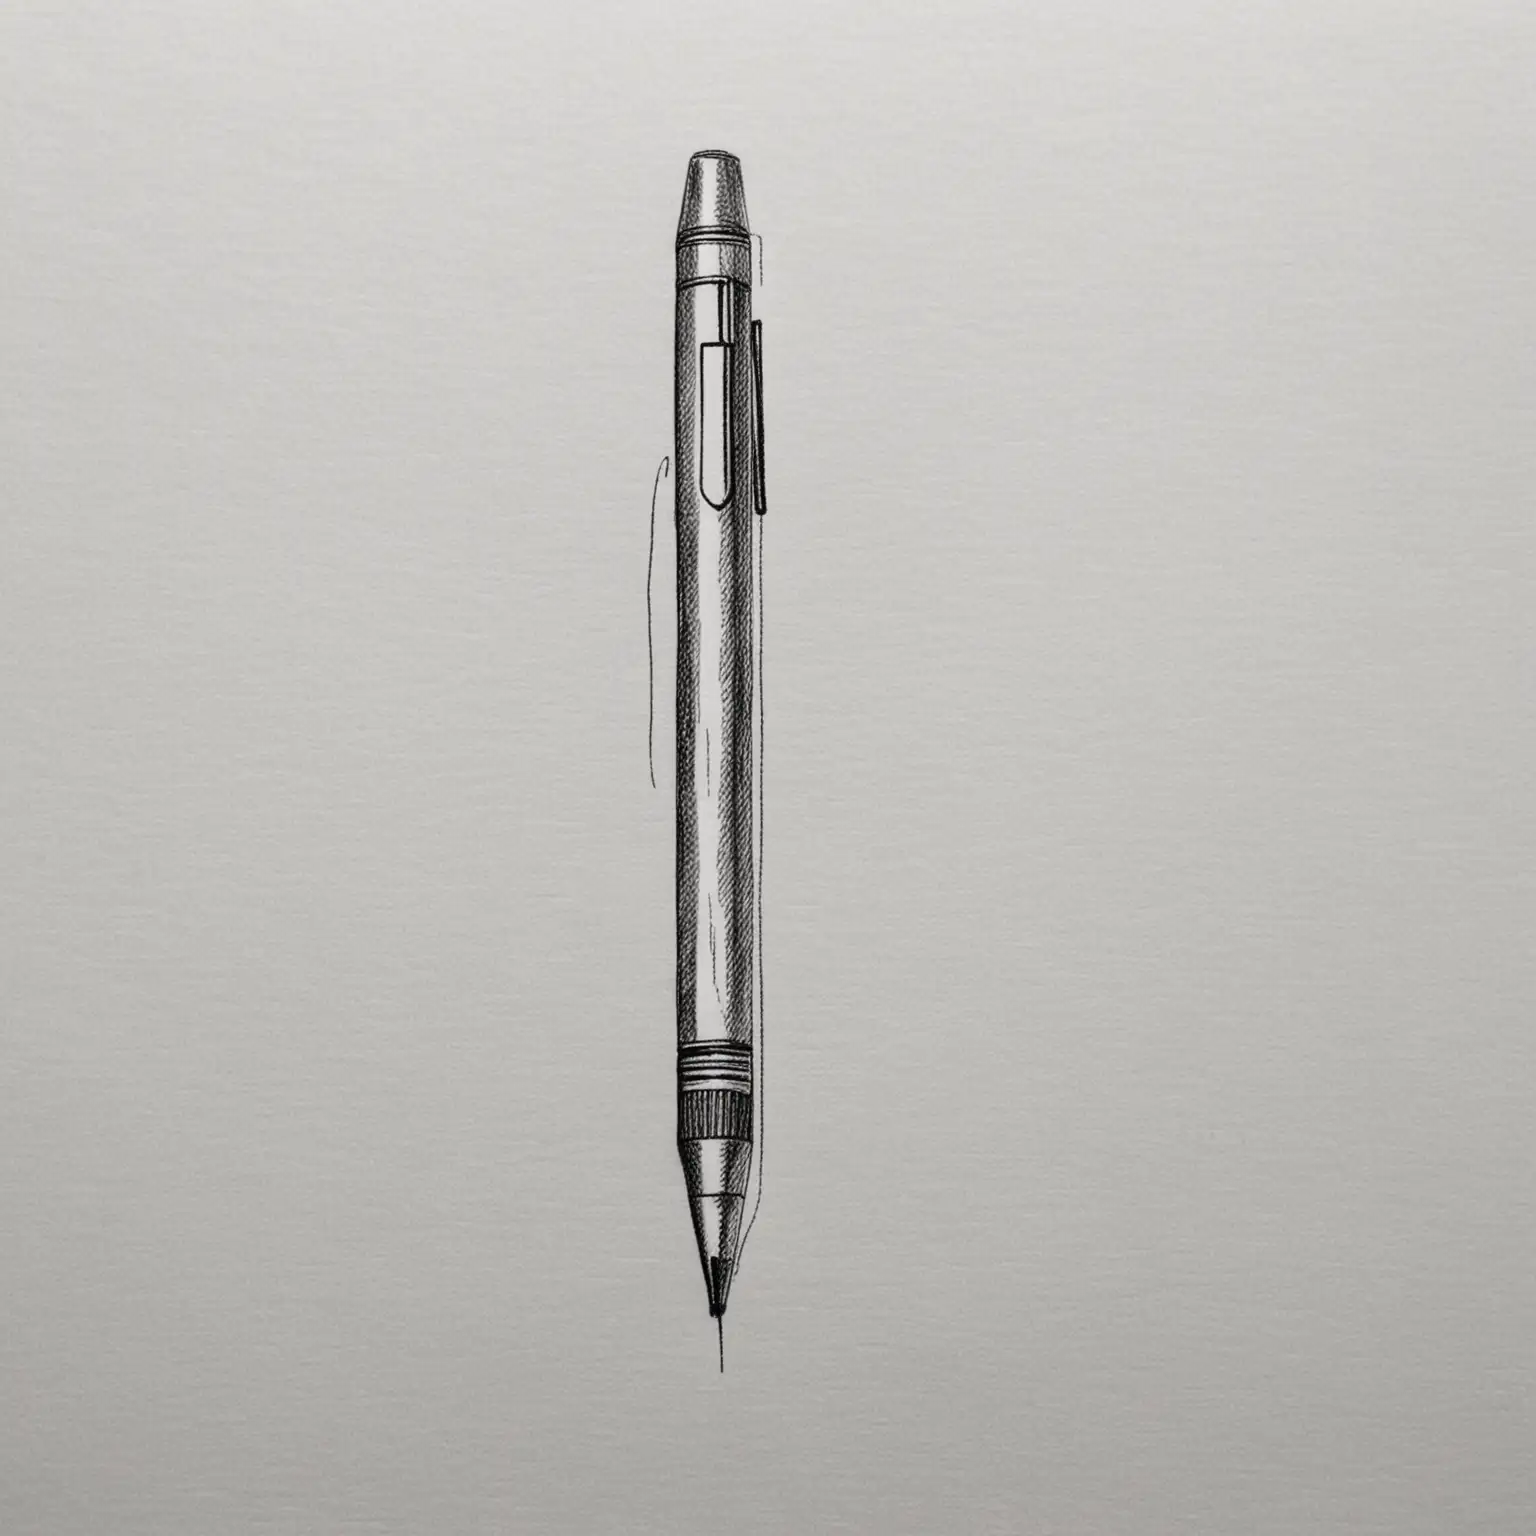 Sketch of a Slim Pen Minimalistic Pencil Drawing